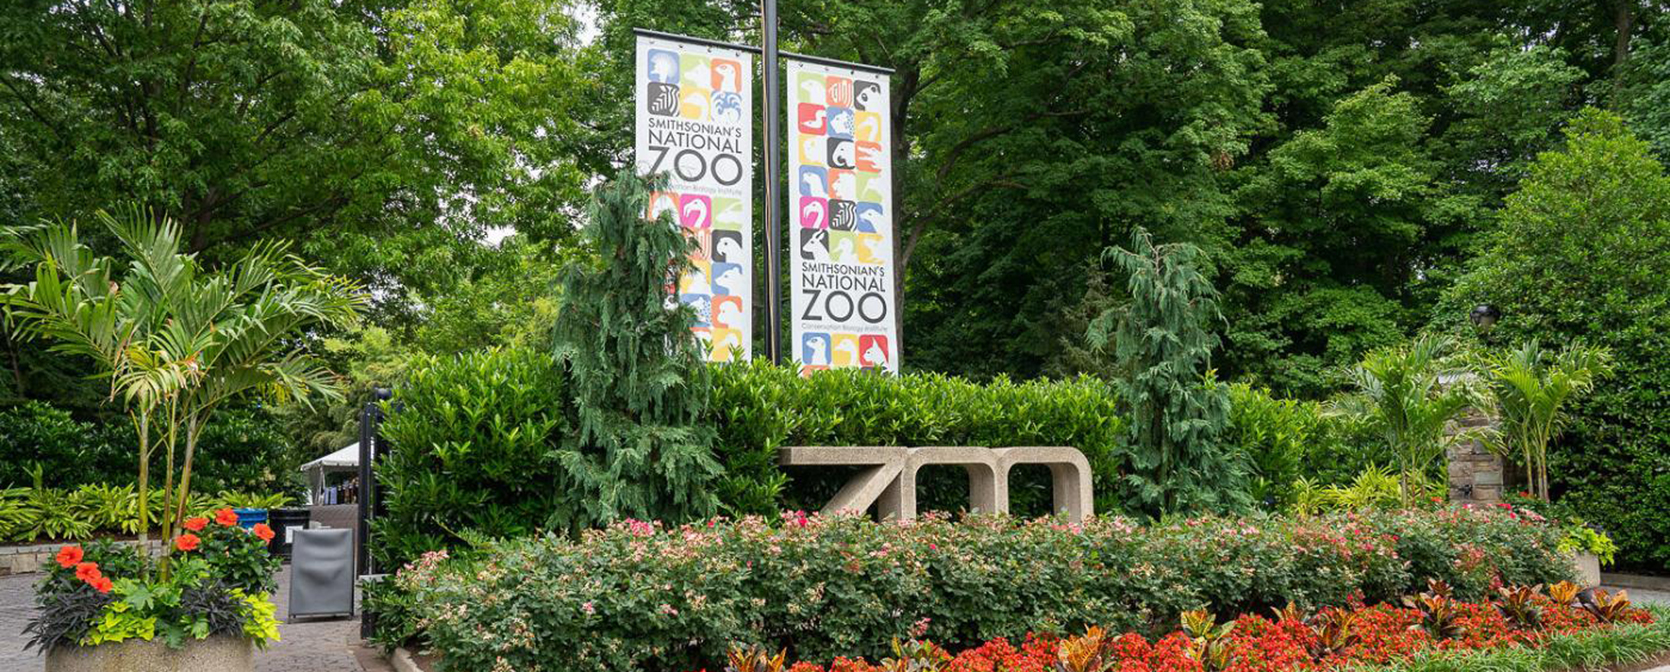 Eingang zum Nationalen Zoo